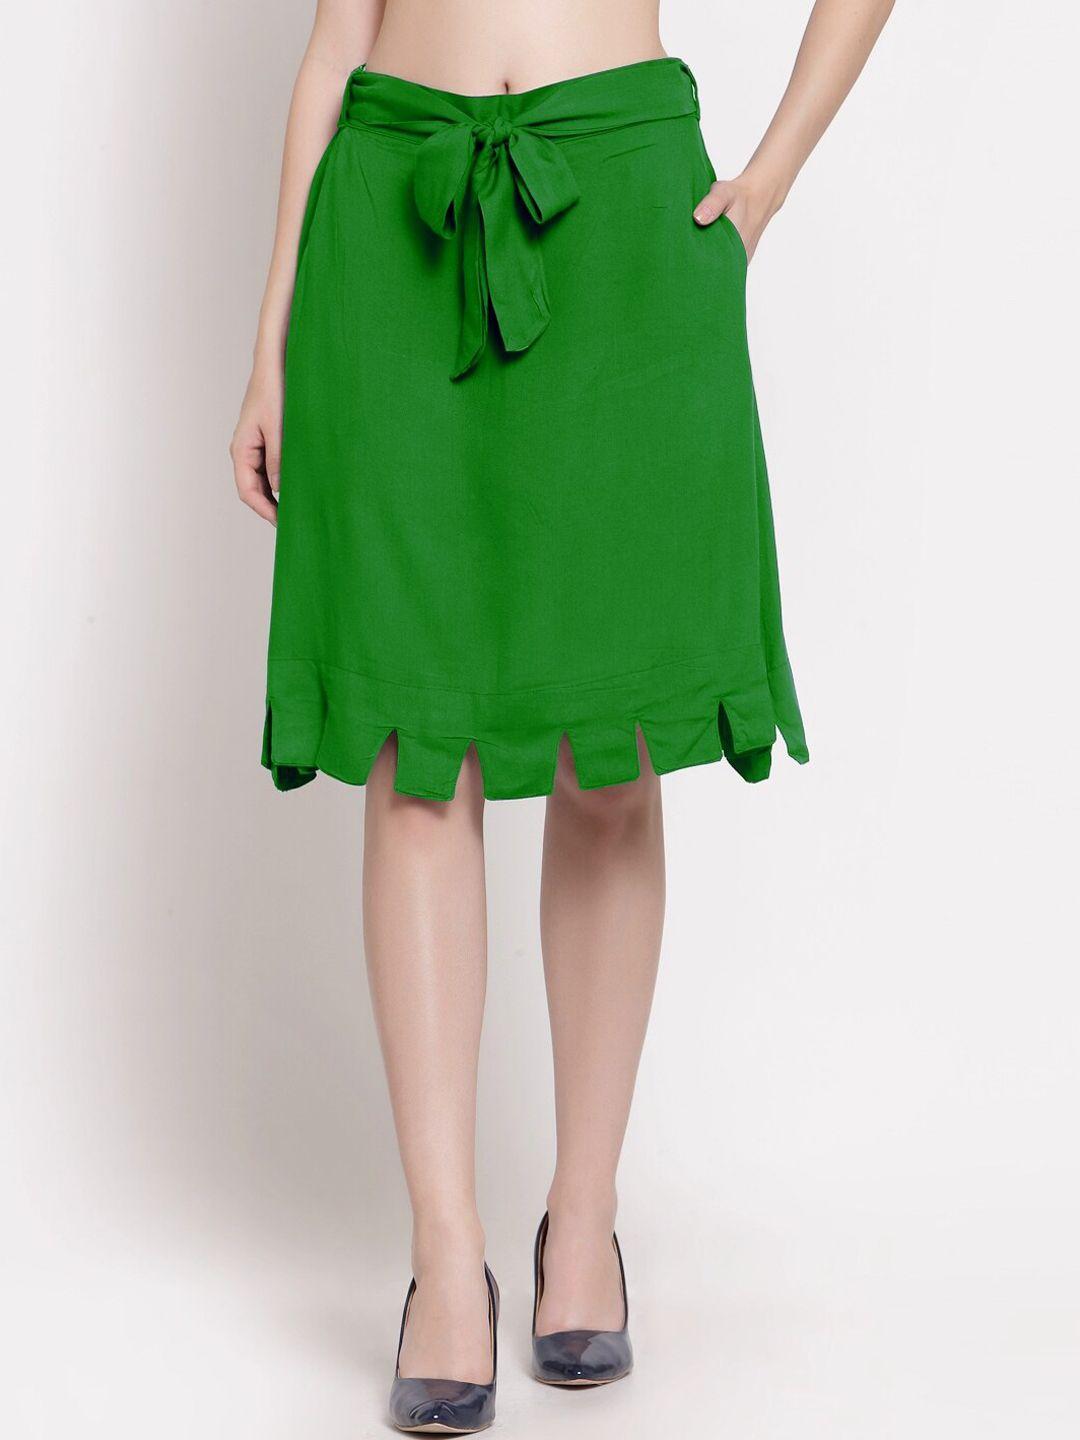 patrorna-women-plus-size-green-solid-straight-silt-skirt